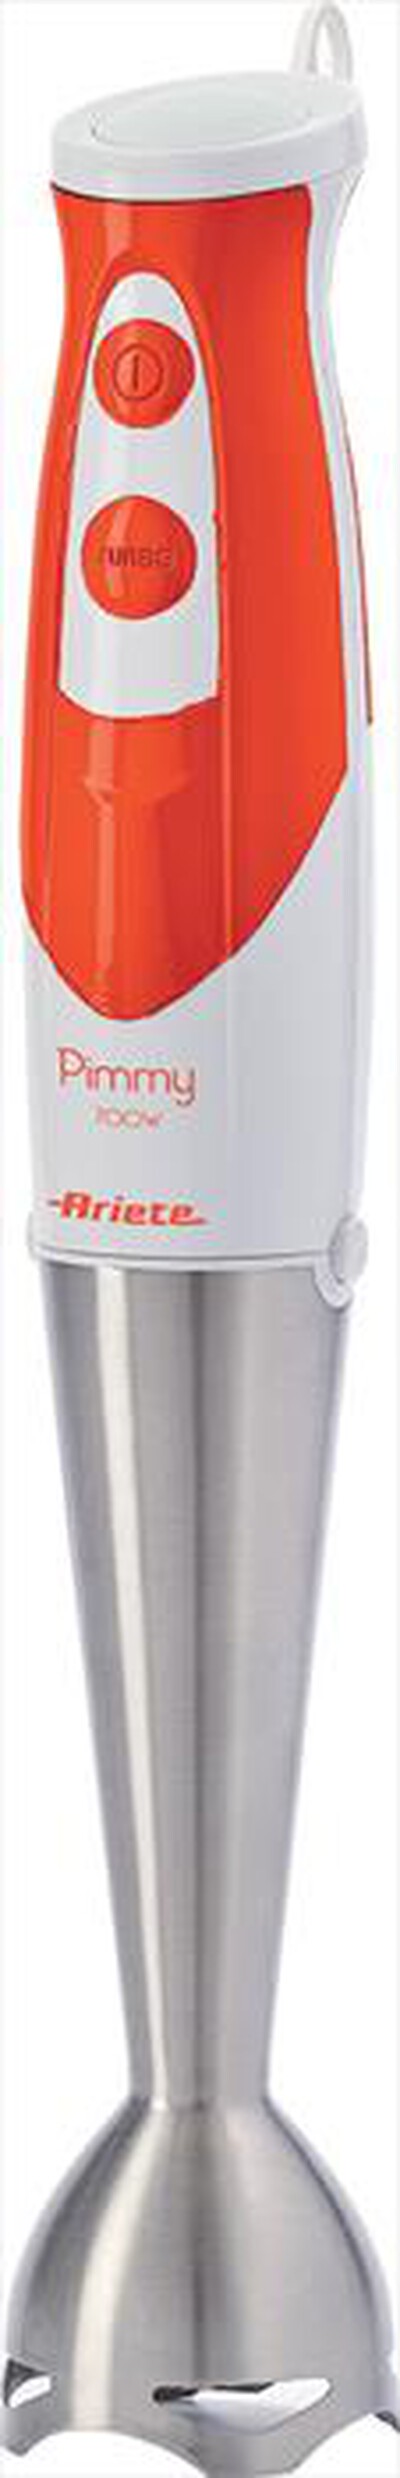 ARIETE - Pimmy / 887 - bianco arancione